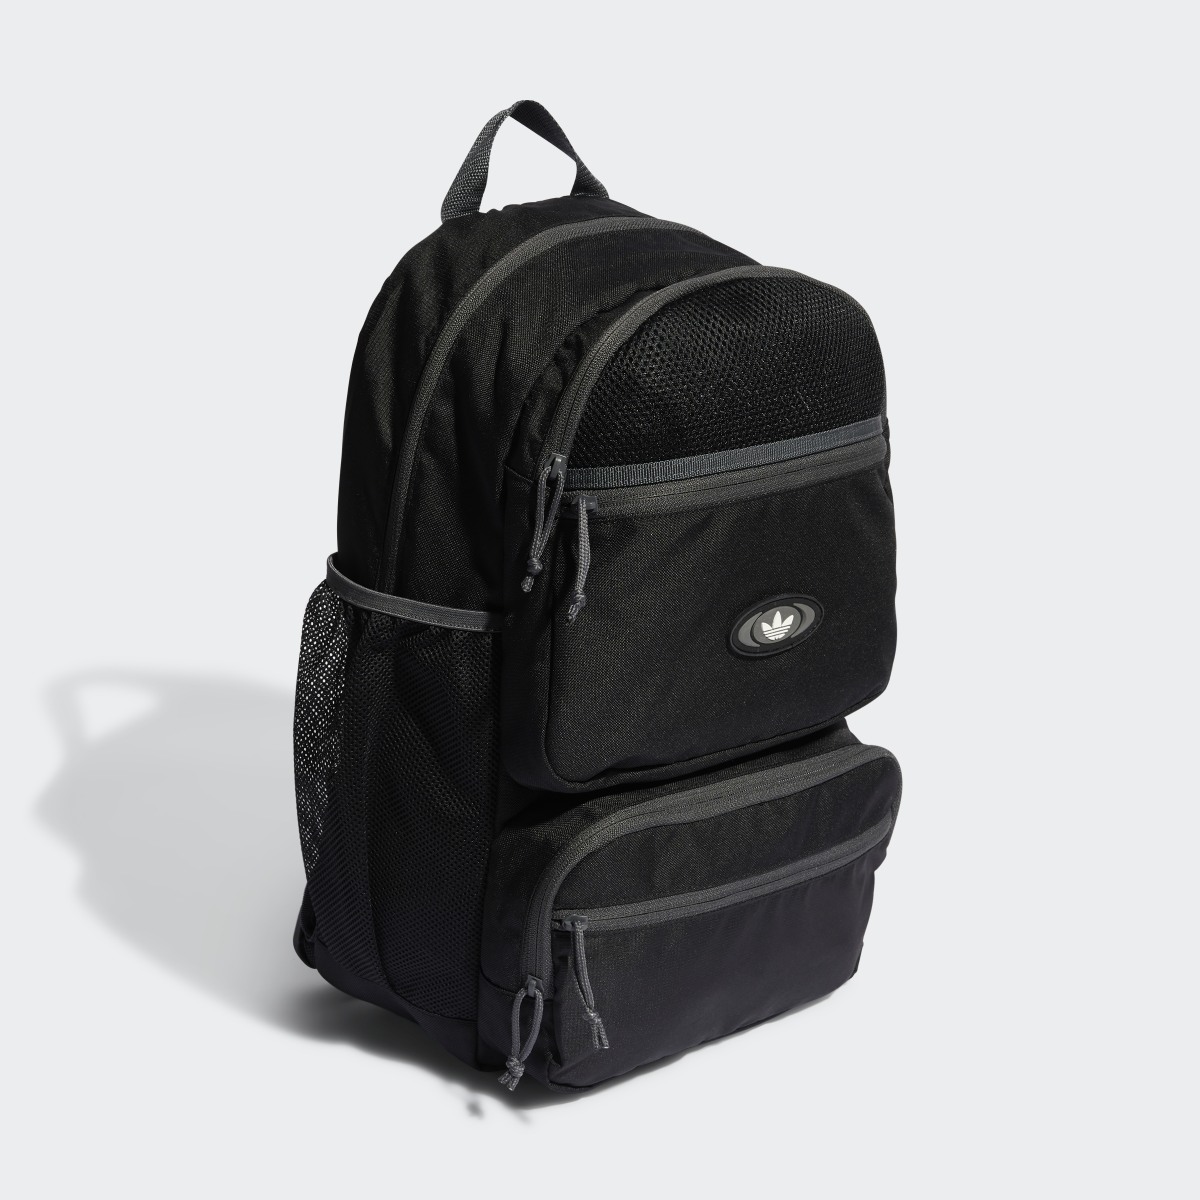 Brand new backpack / Korean Bag | Shopee Philippines